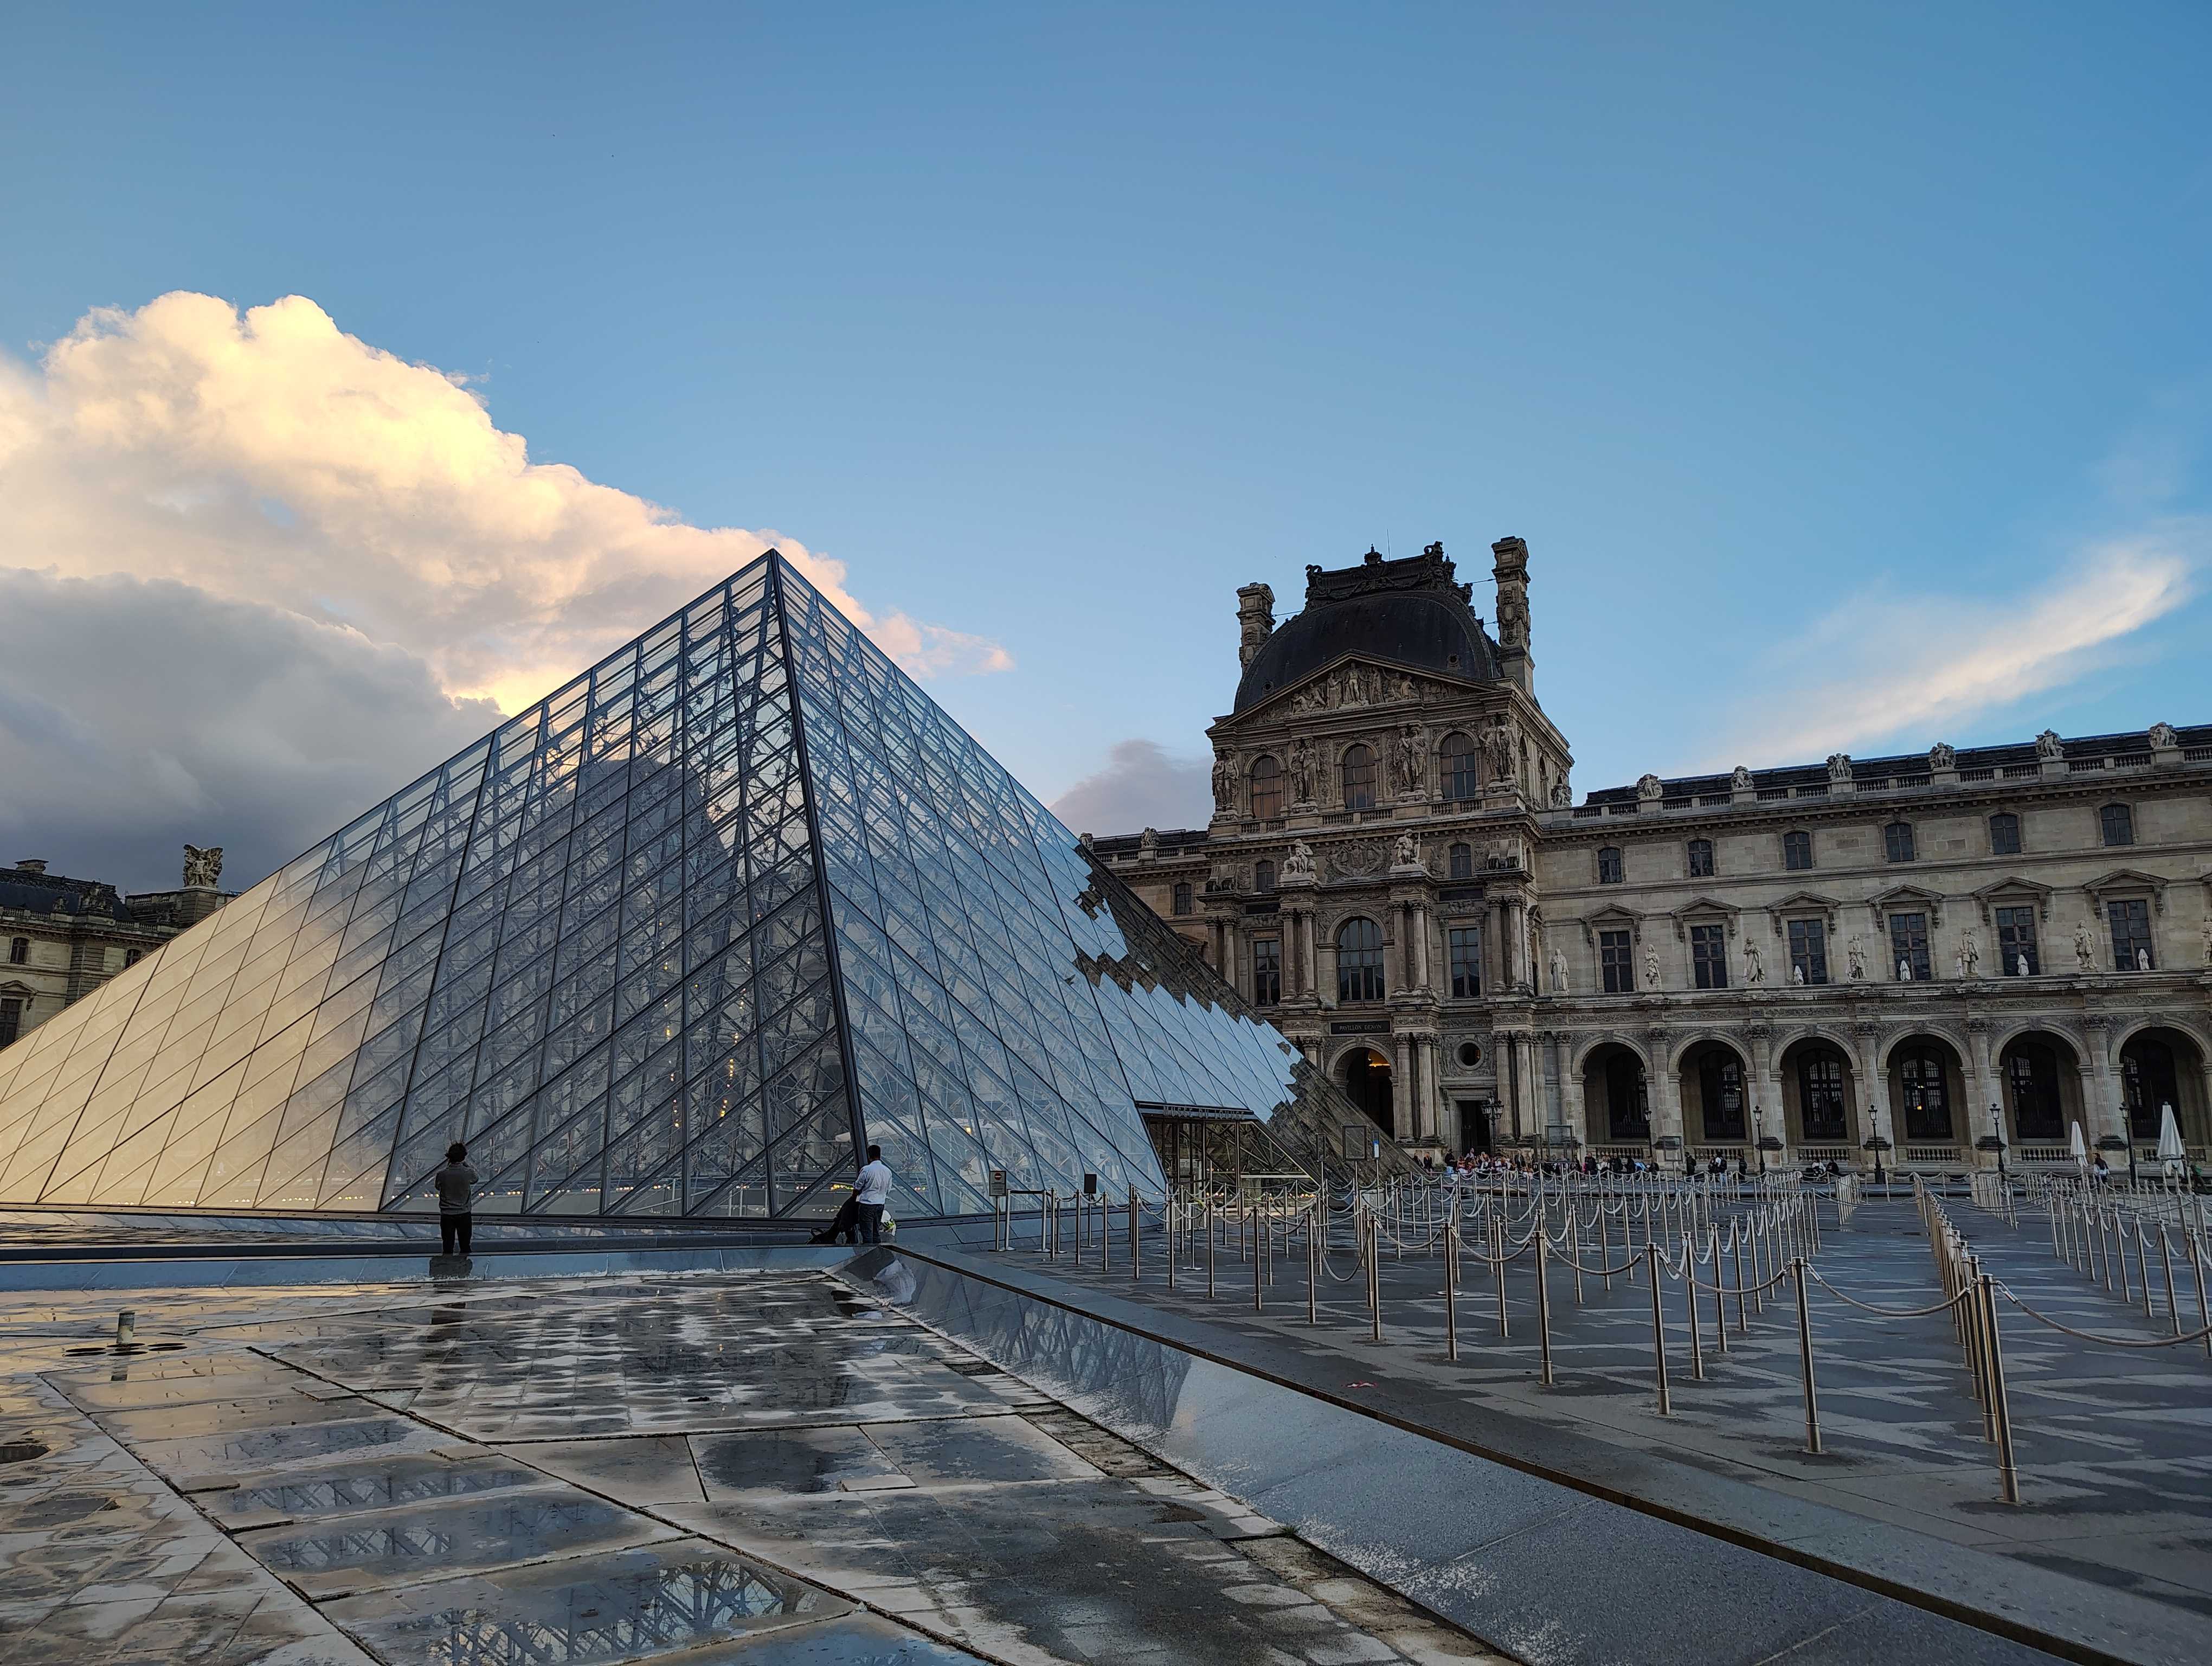 The Pyramide du Louvre